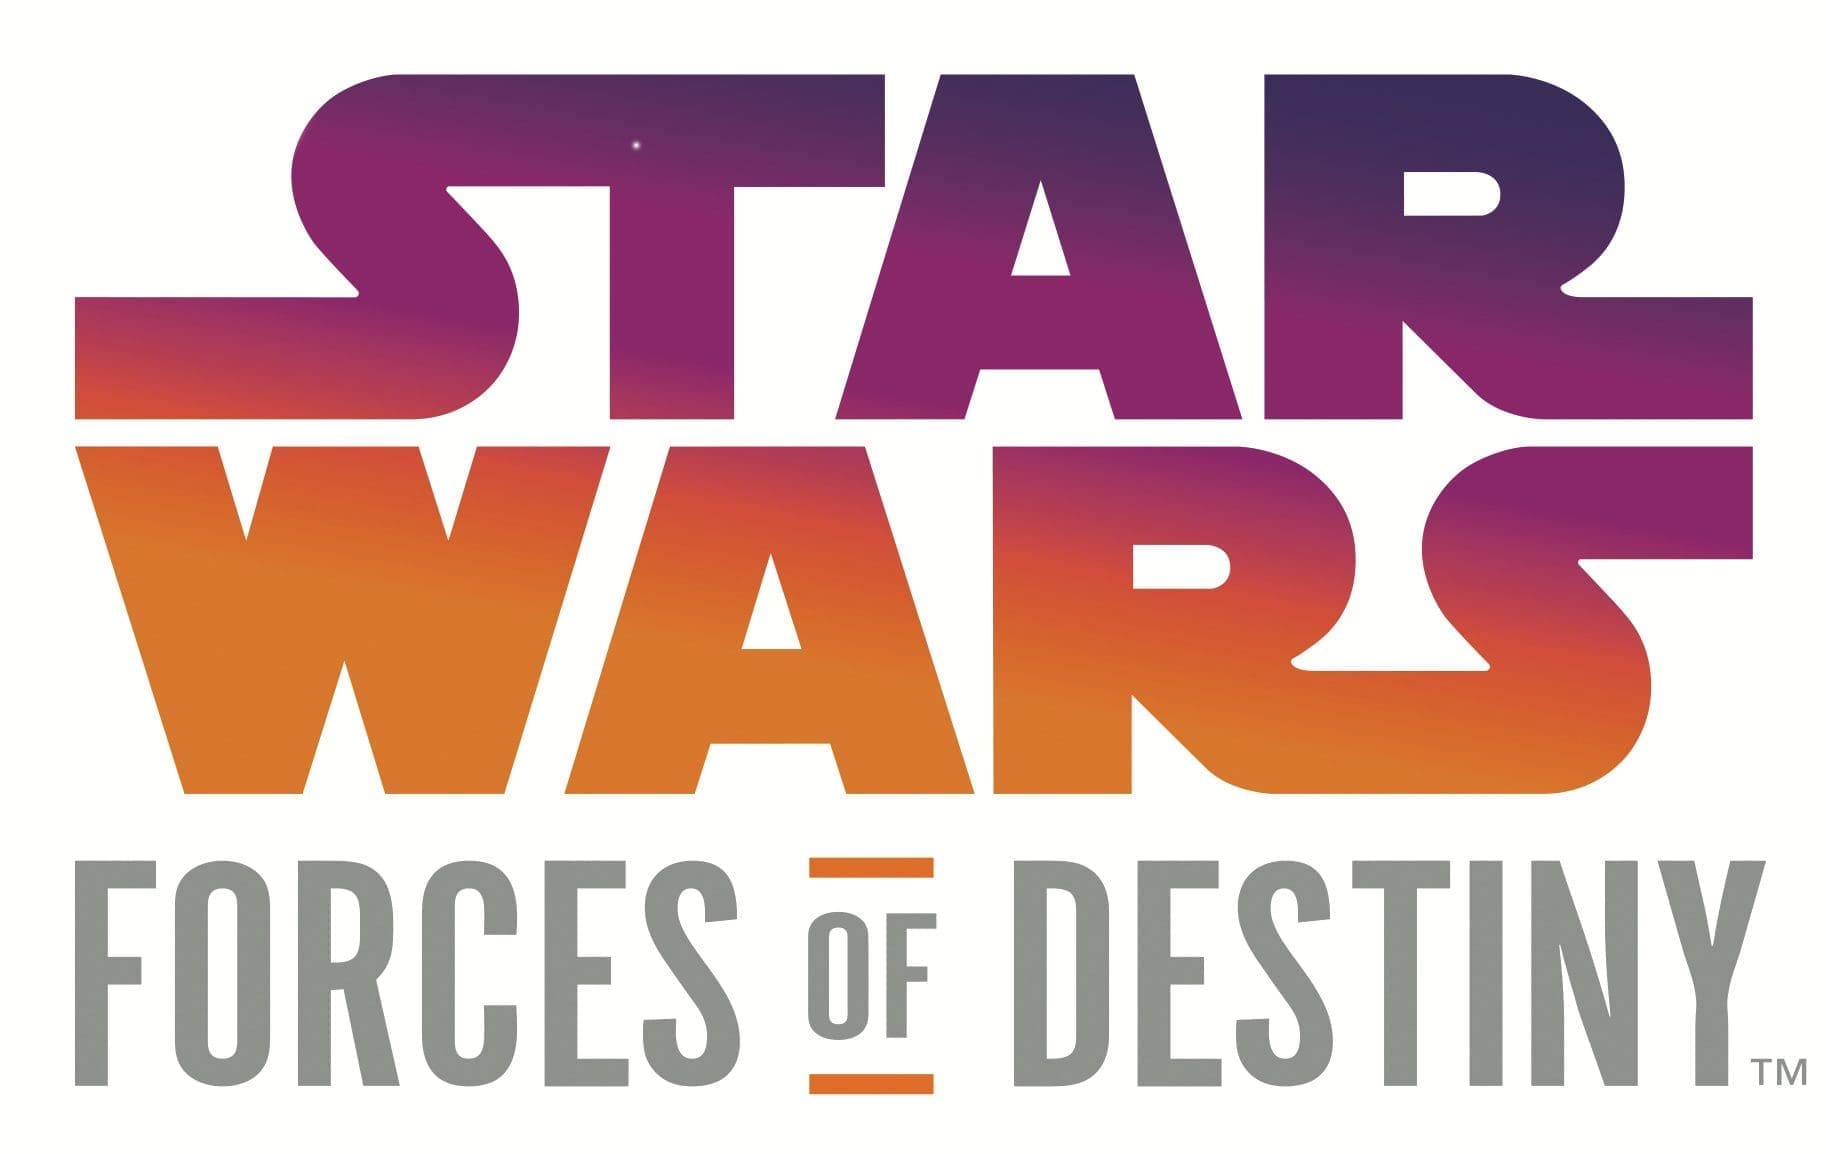 Star Wars Forces of Destiny